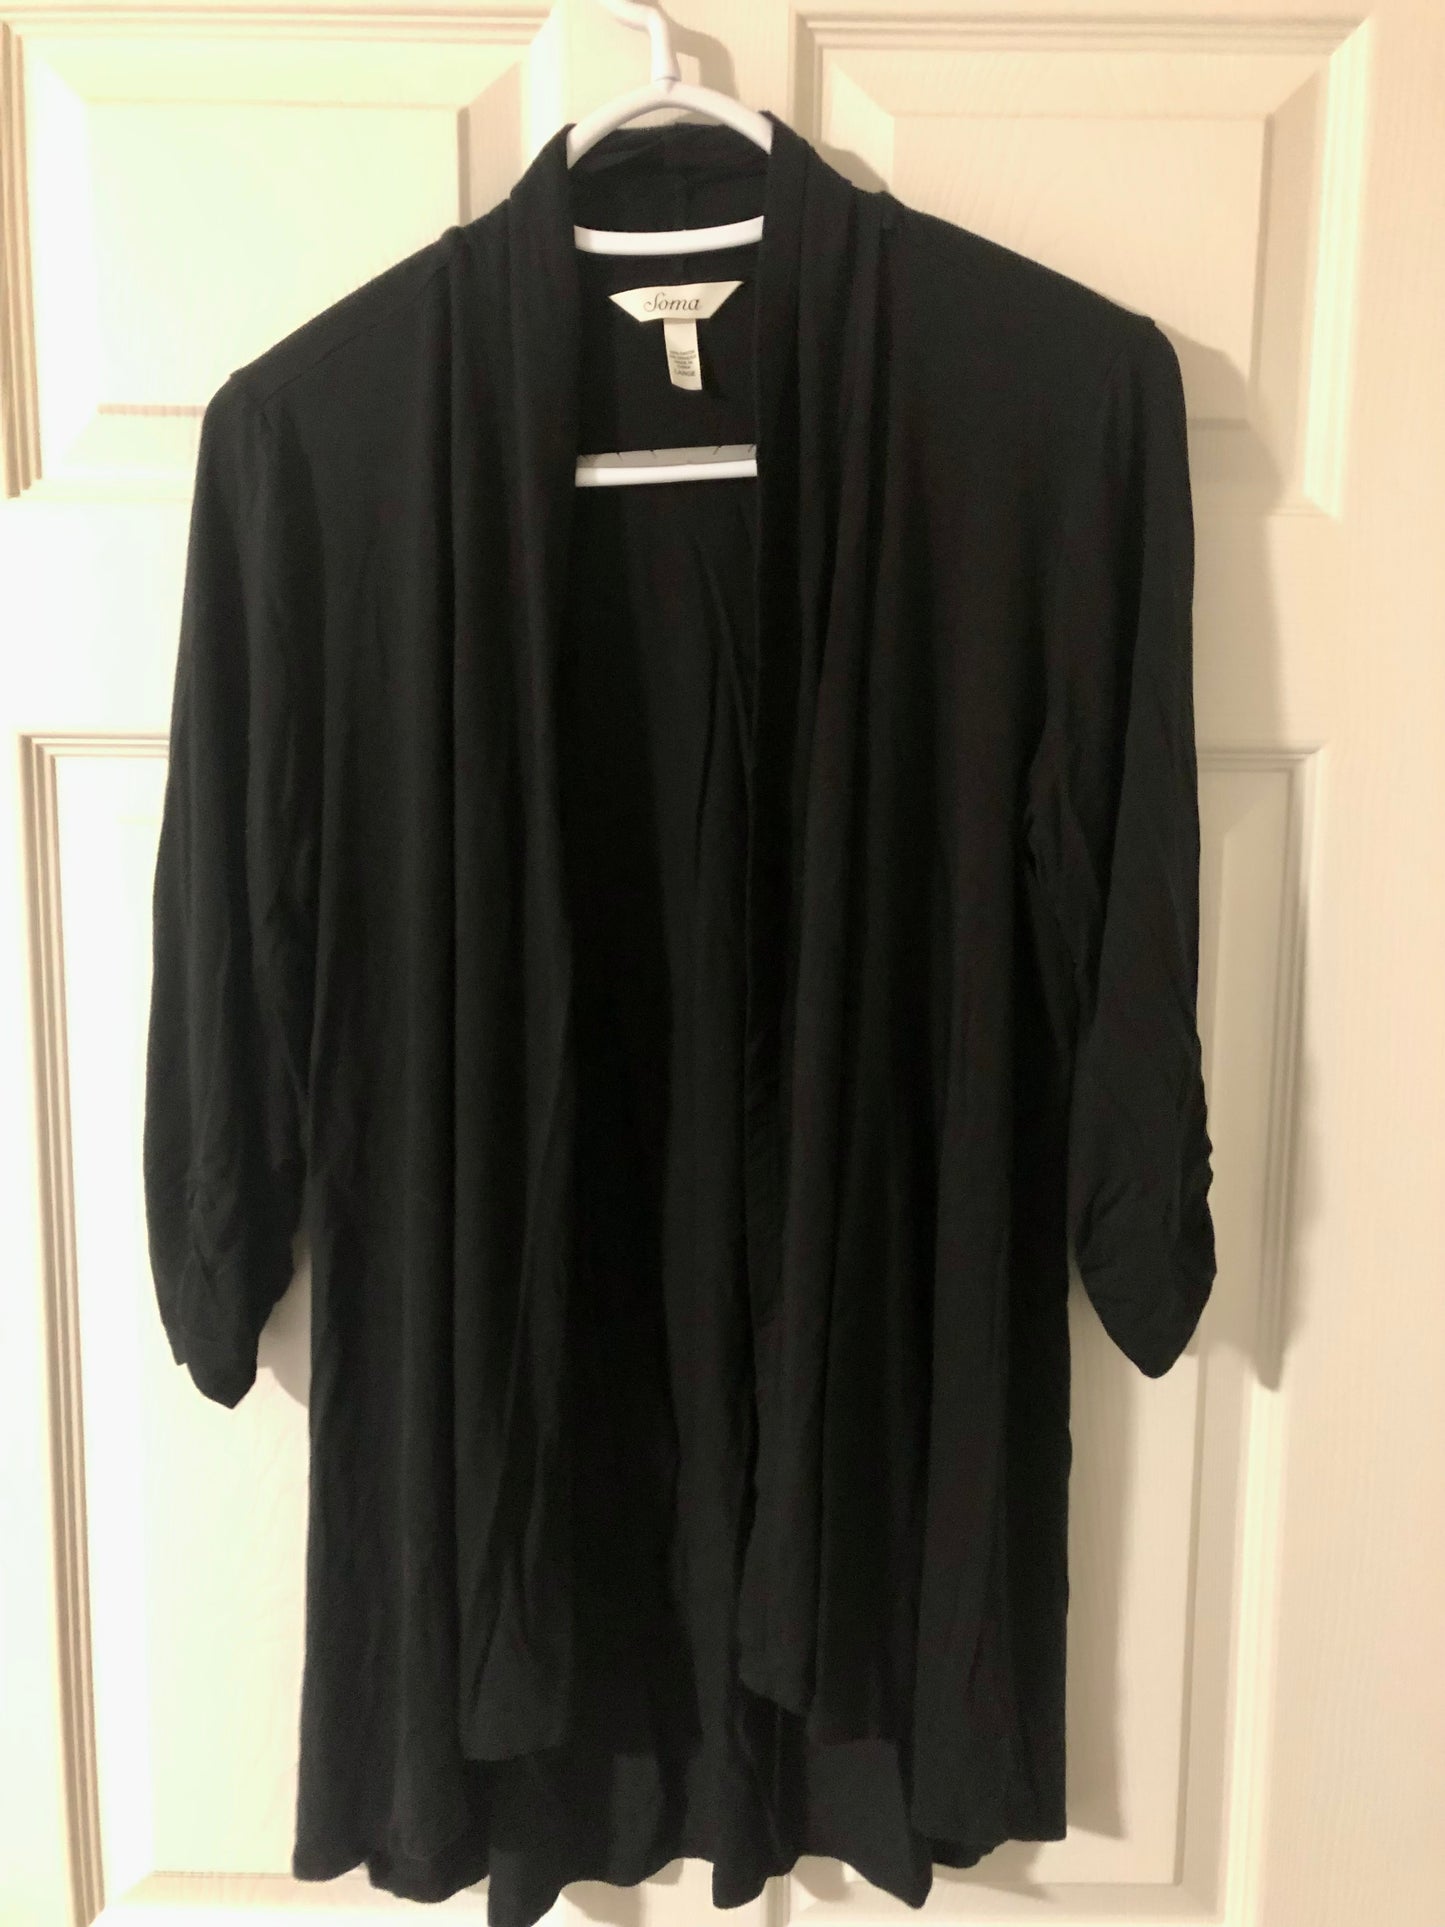 Soma black 3/4 sleeve cardigan women's size L